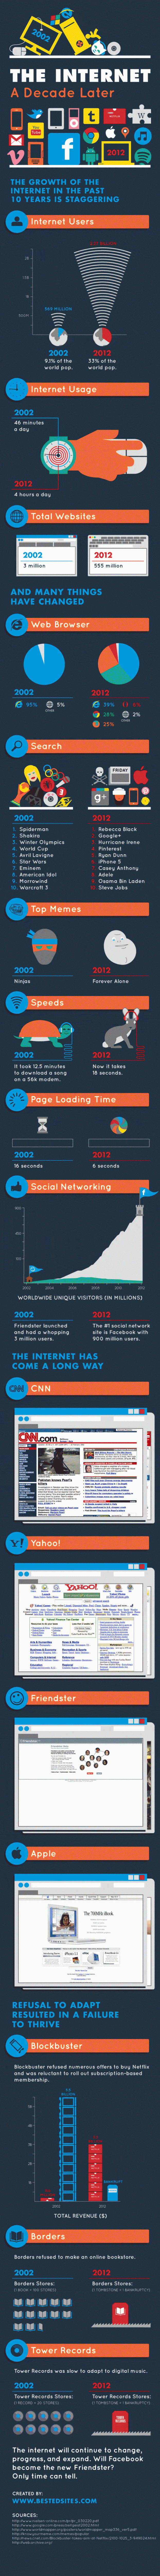 Internet a Decade Later